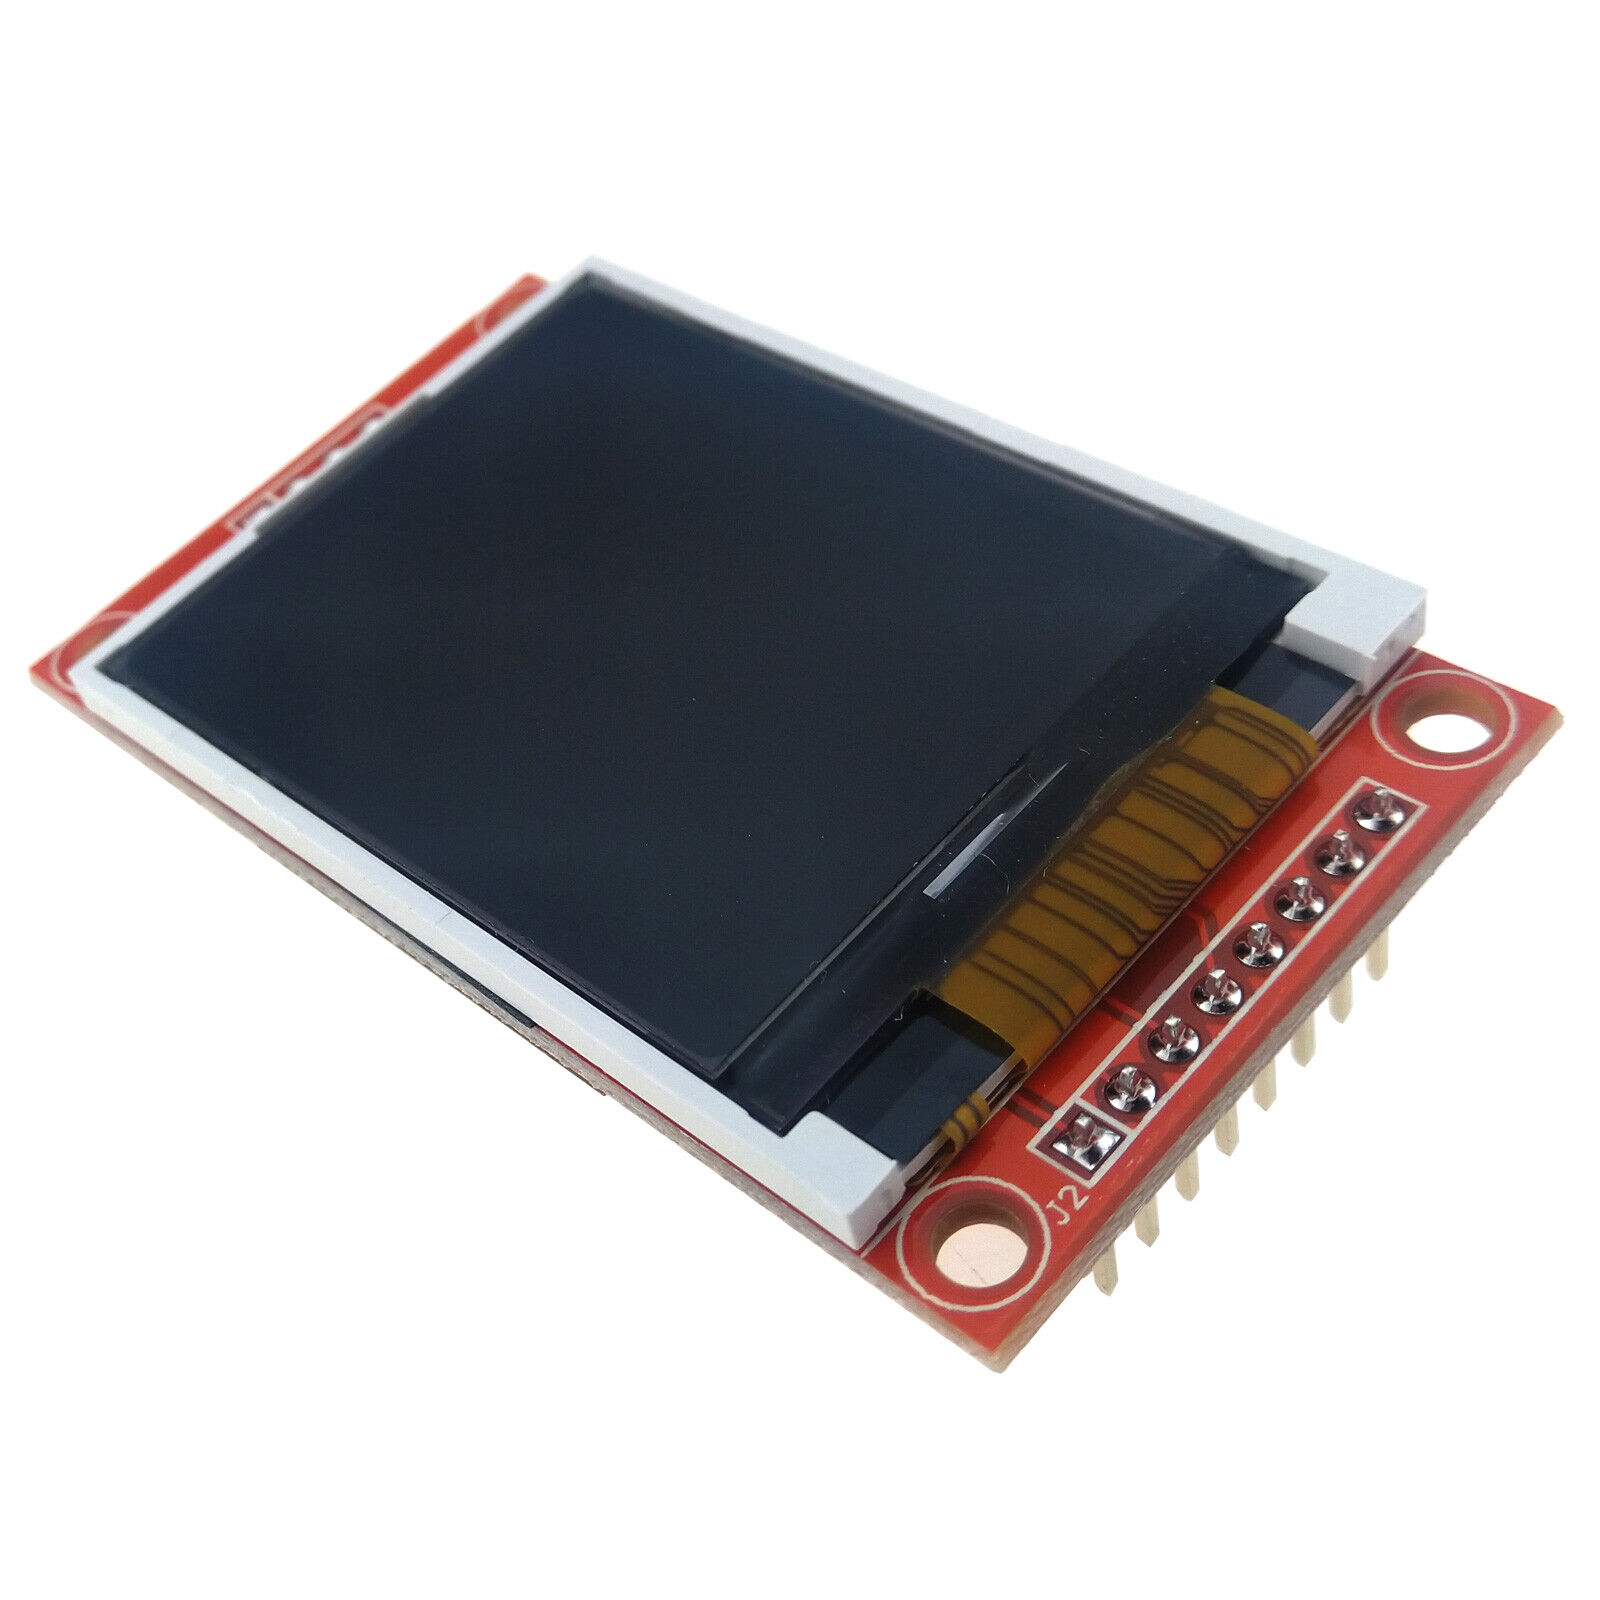 1.8 inch SPI TFT LCD Display Module Board ST7735 128x160 Color 51/AVR/STM32/ARM